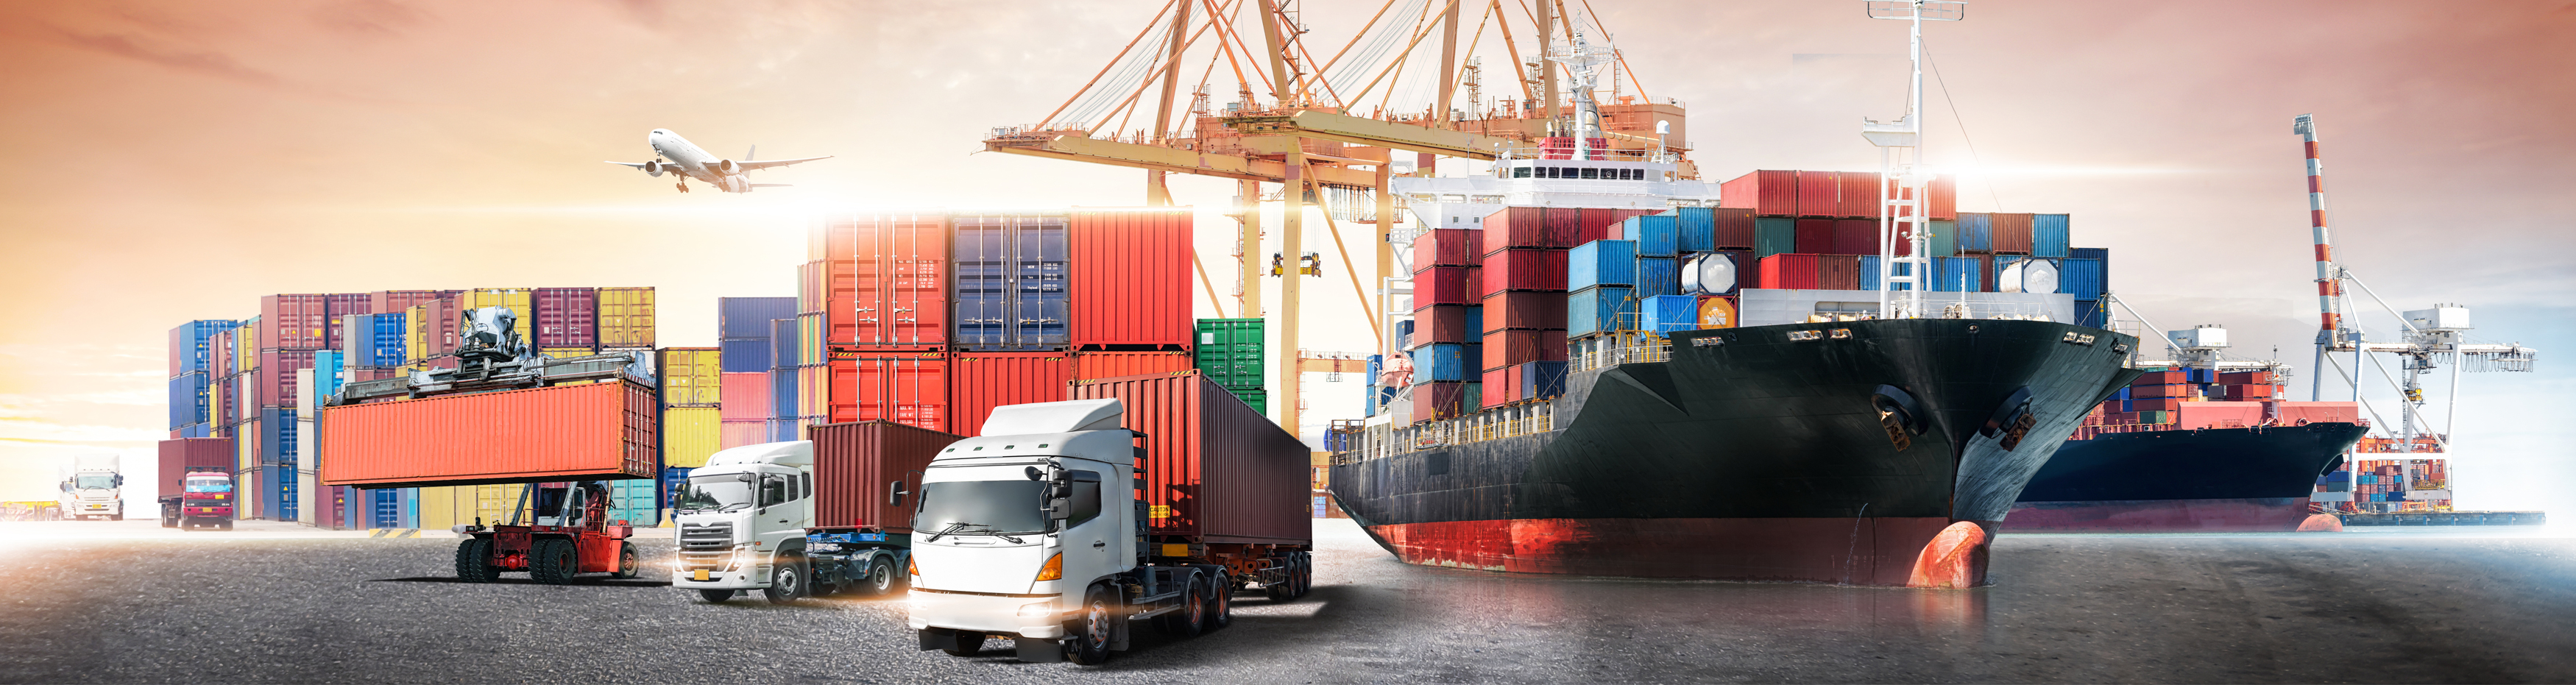 Short Term Storage in Dubai, UAE - Safeway International Shipping